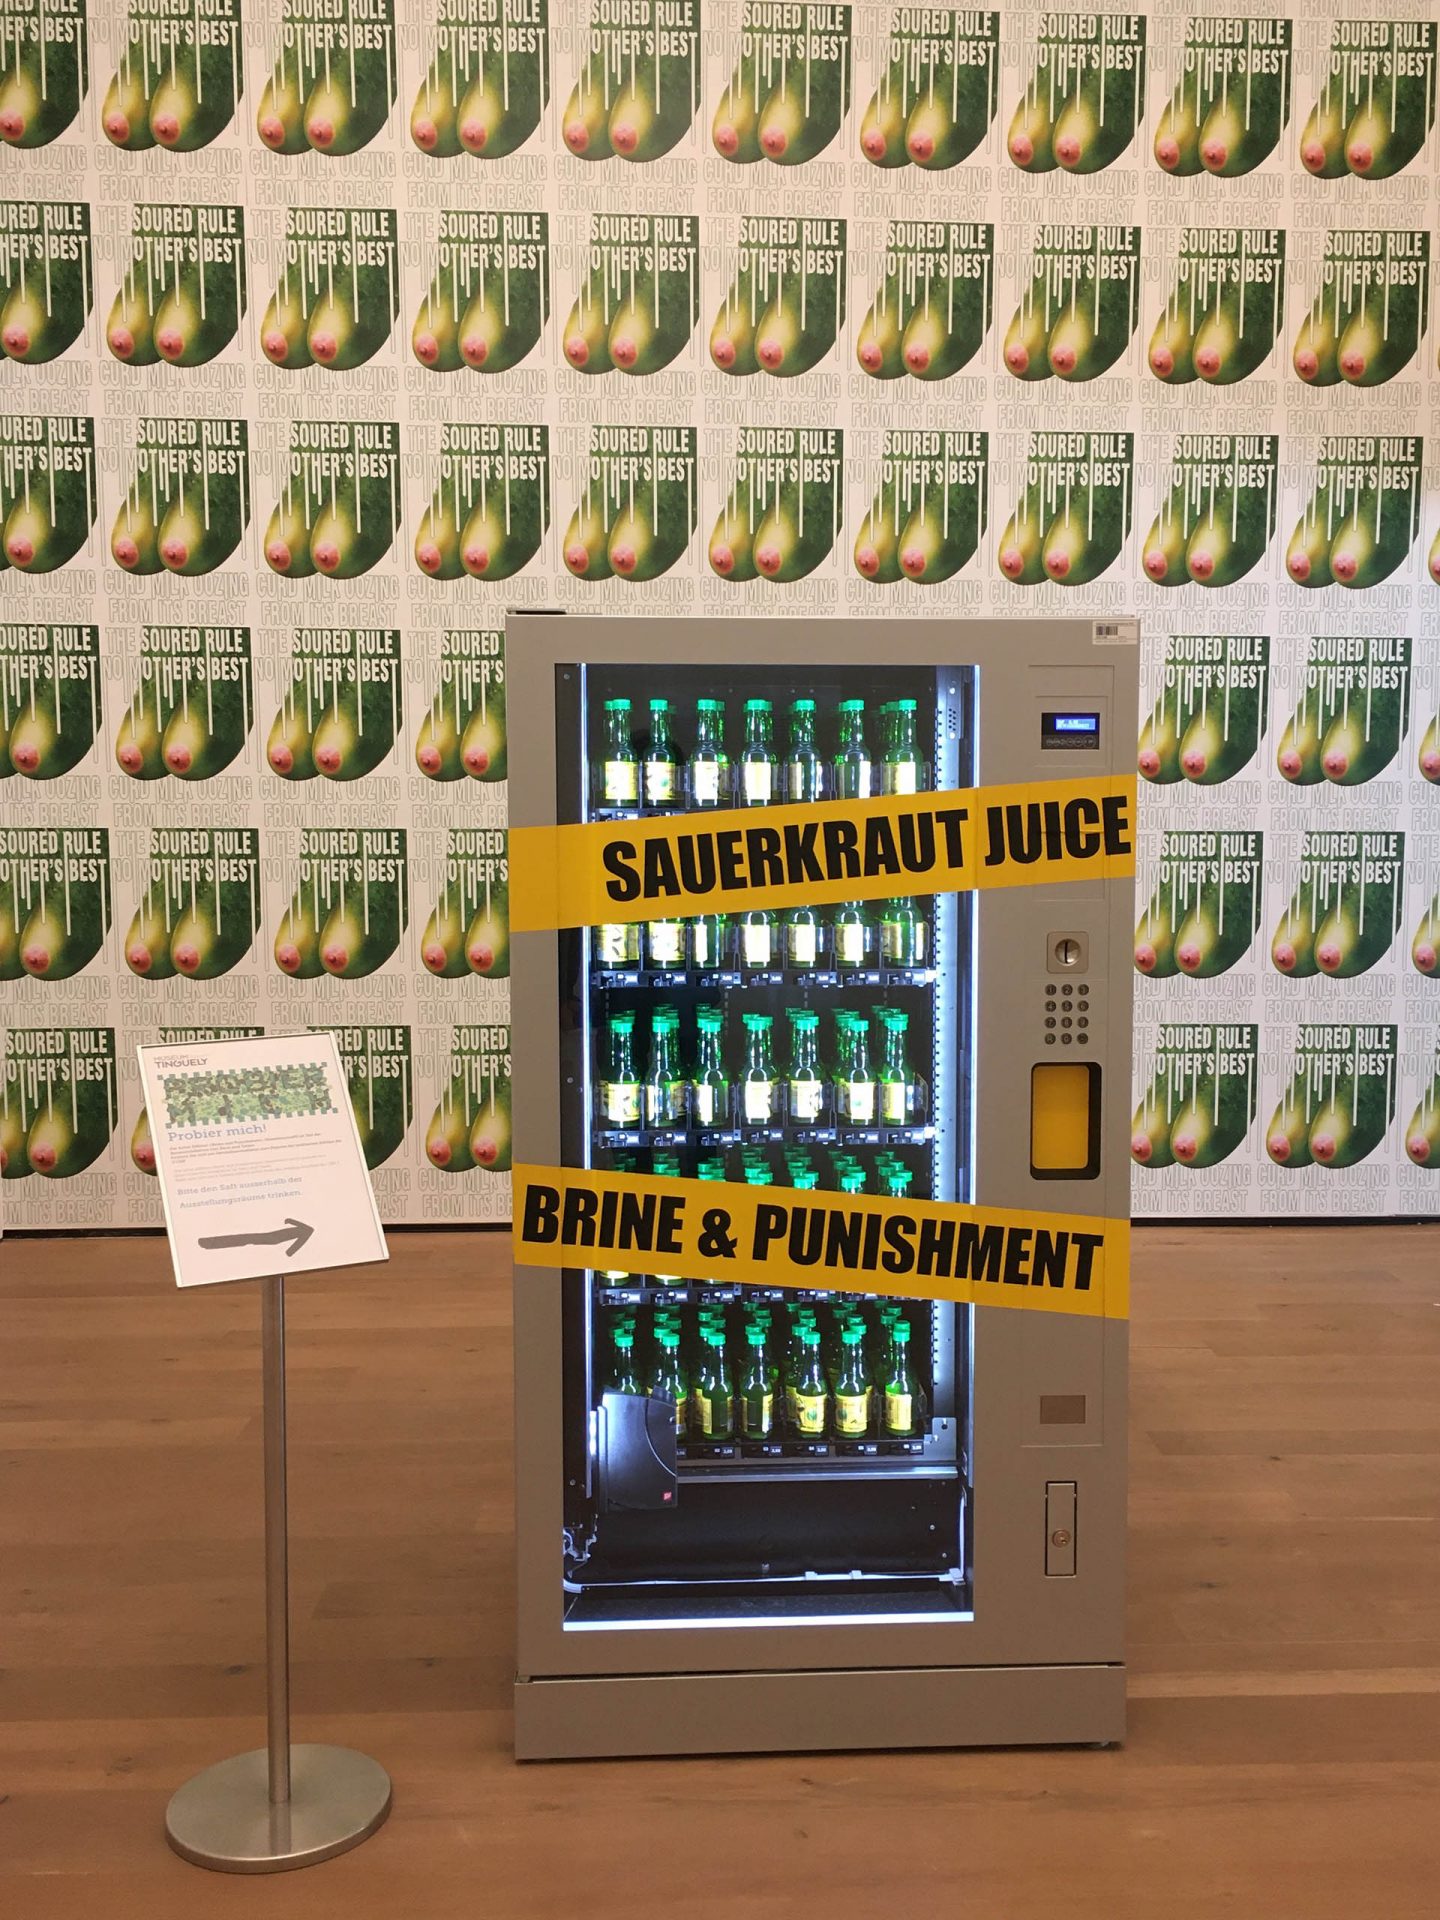 Art and packaging: The sauerkraut juice vending machine from Slavs and Tatars